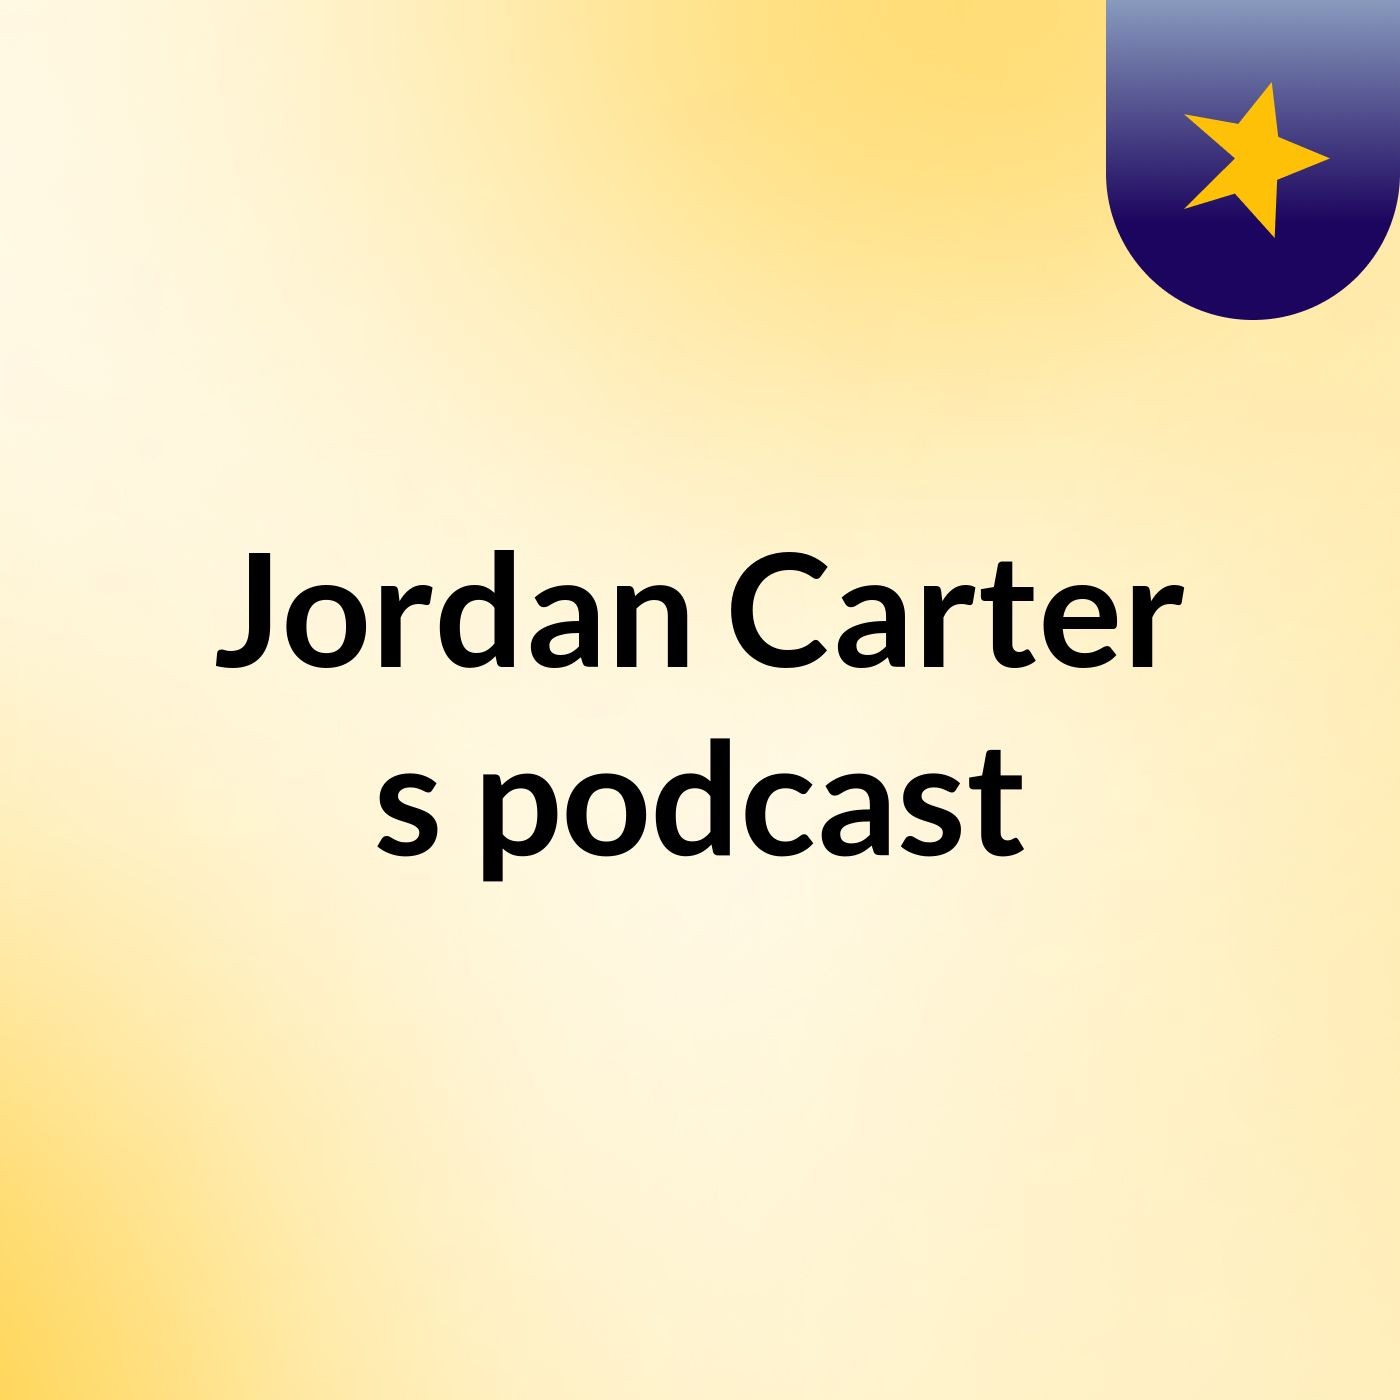 Episode 5 - Jordan Carter's podcast